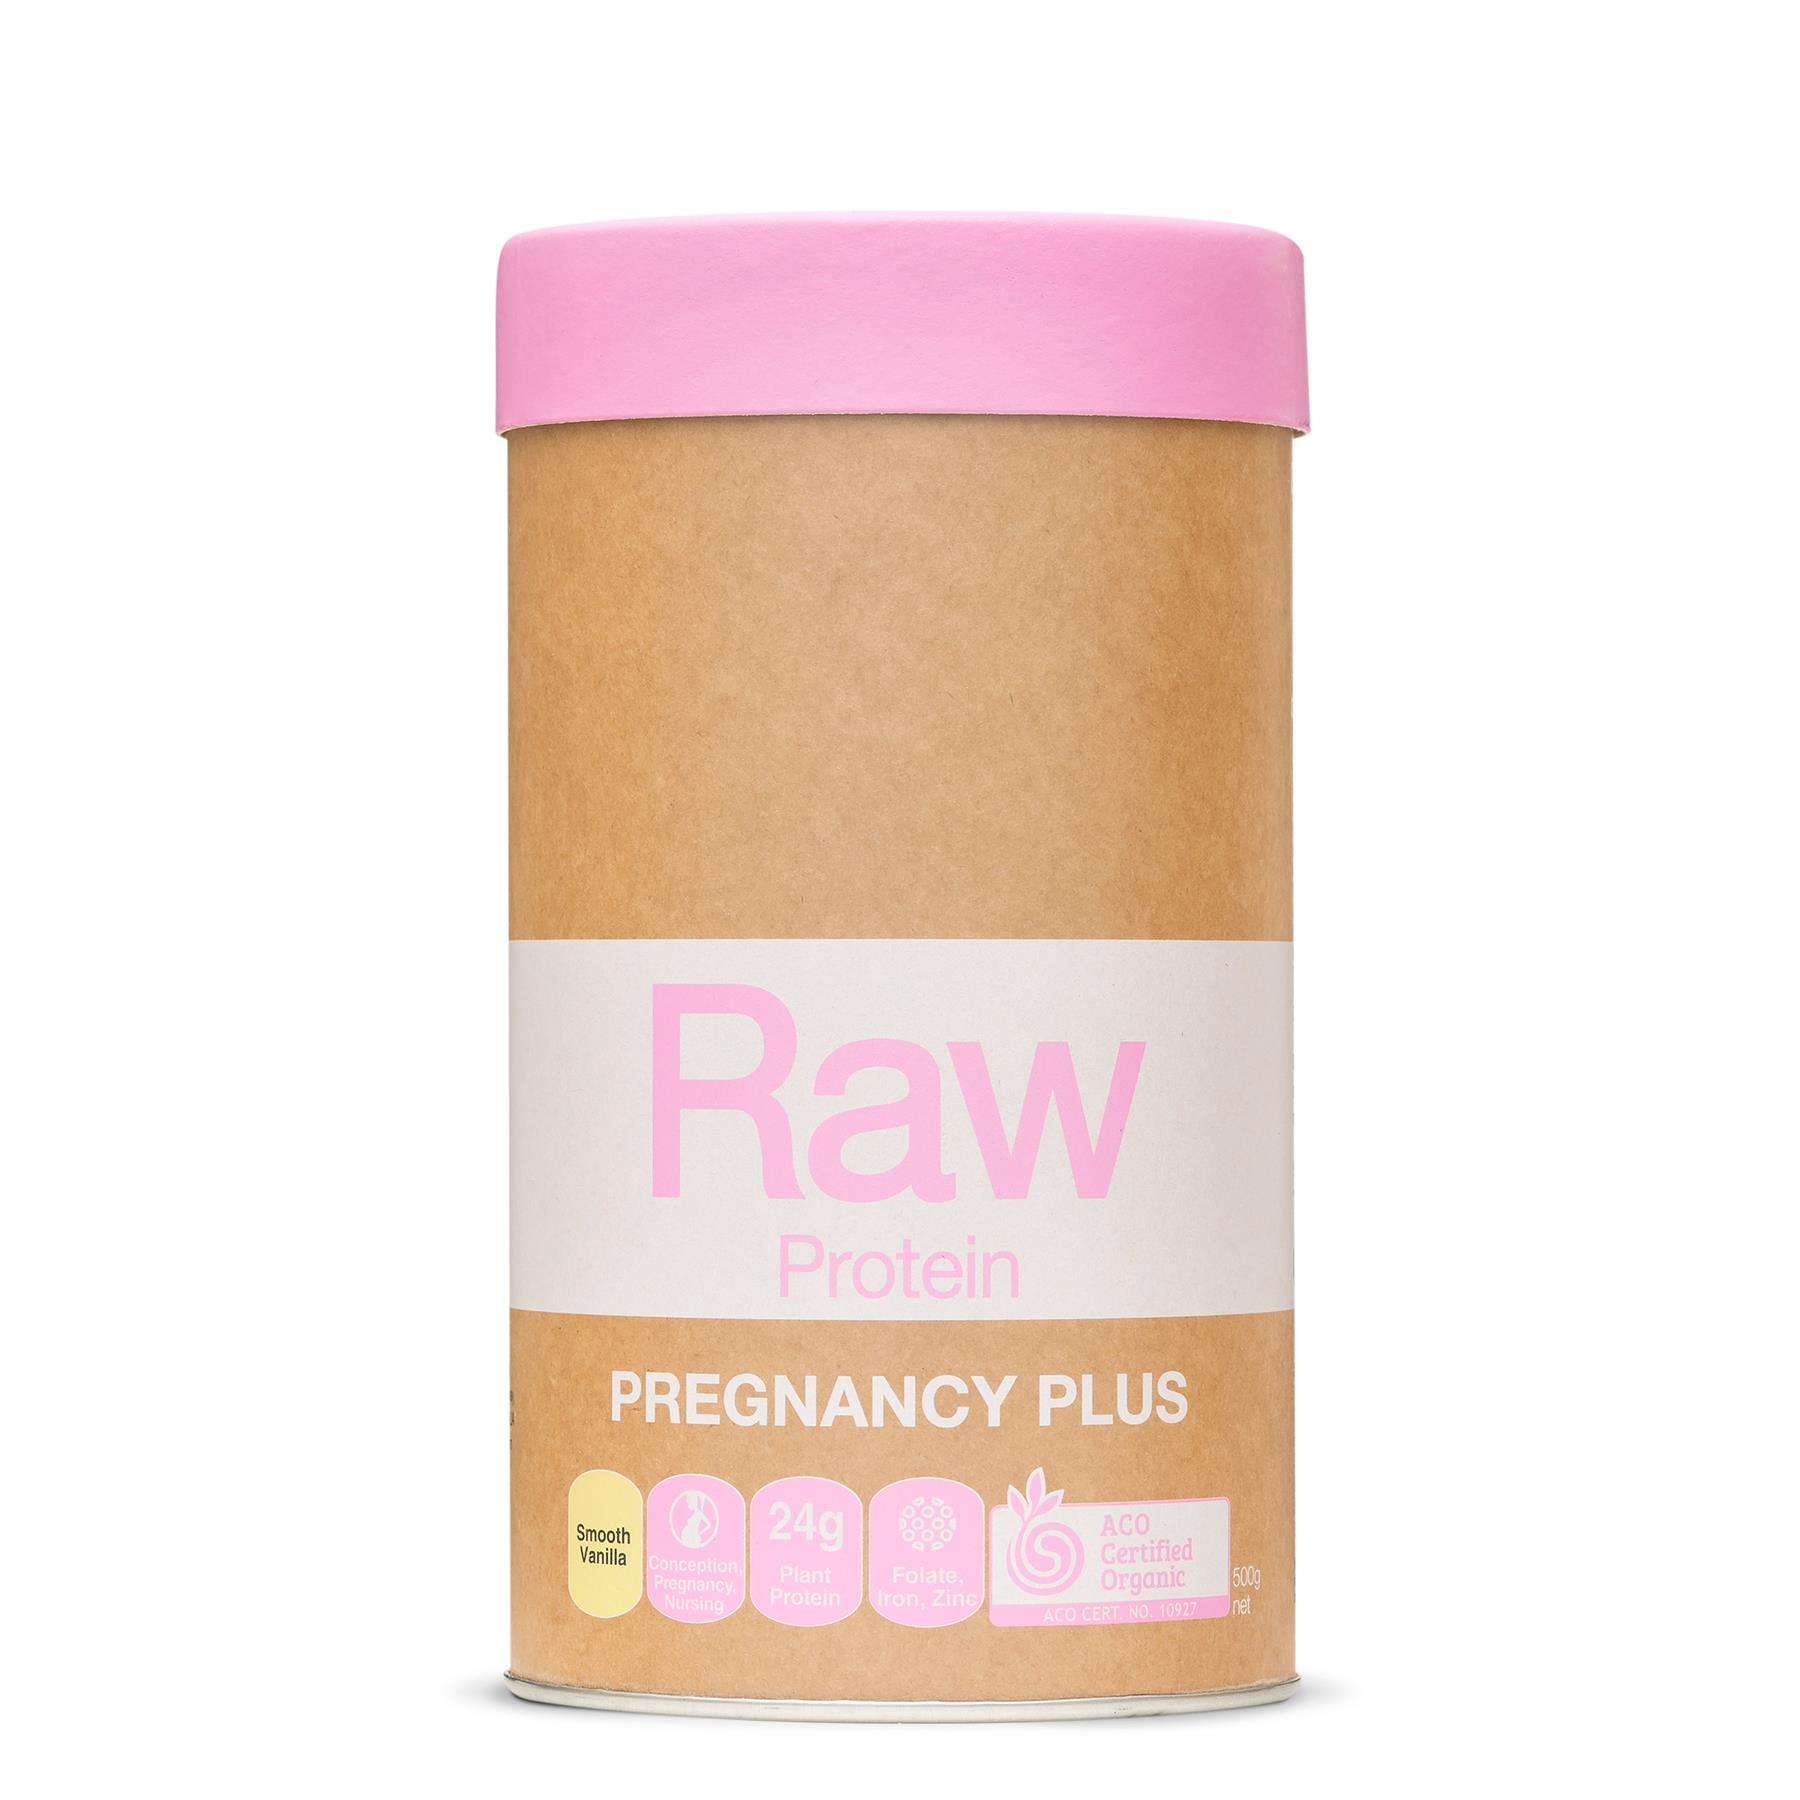 del Raw Protein Pregnancy Plus Smooth Vanilla 500g